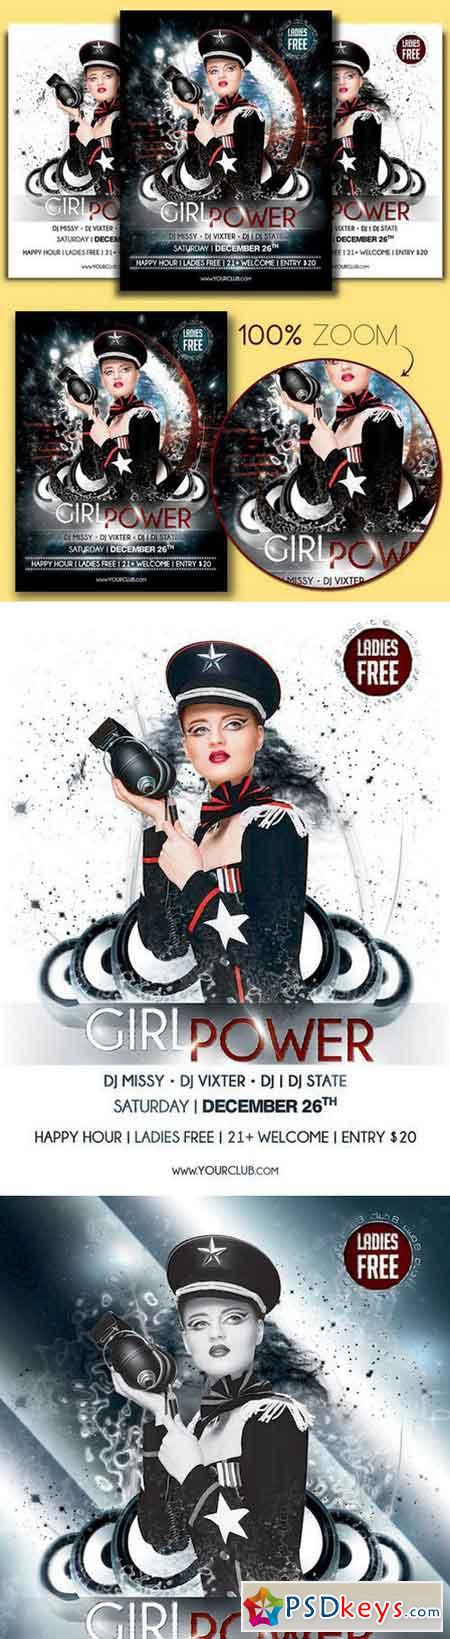 Girl Power Flyer Template 941825